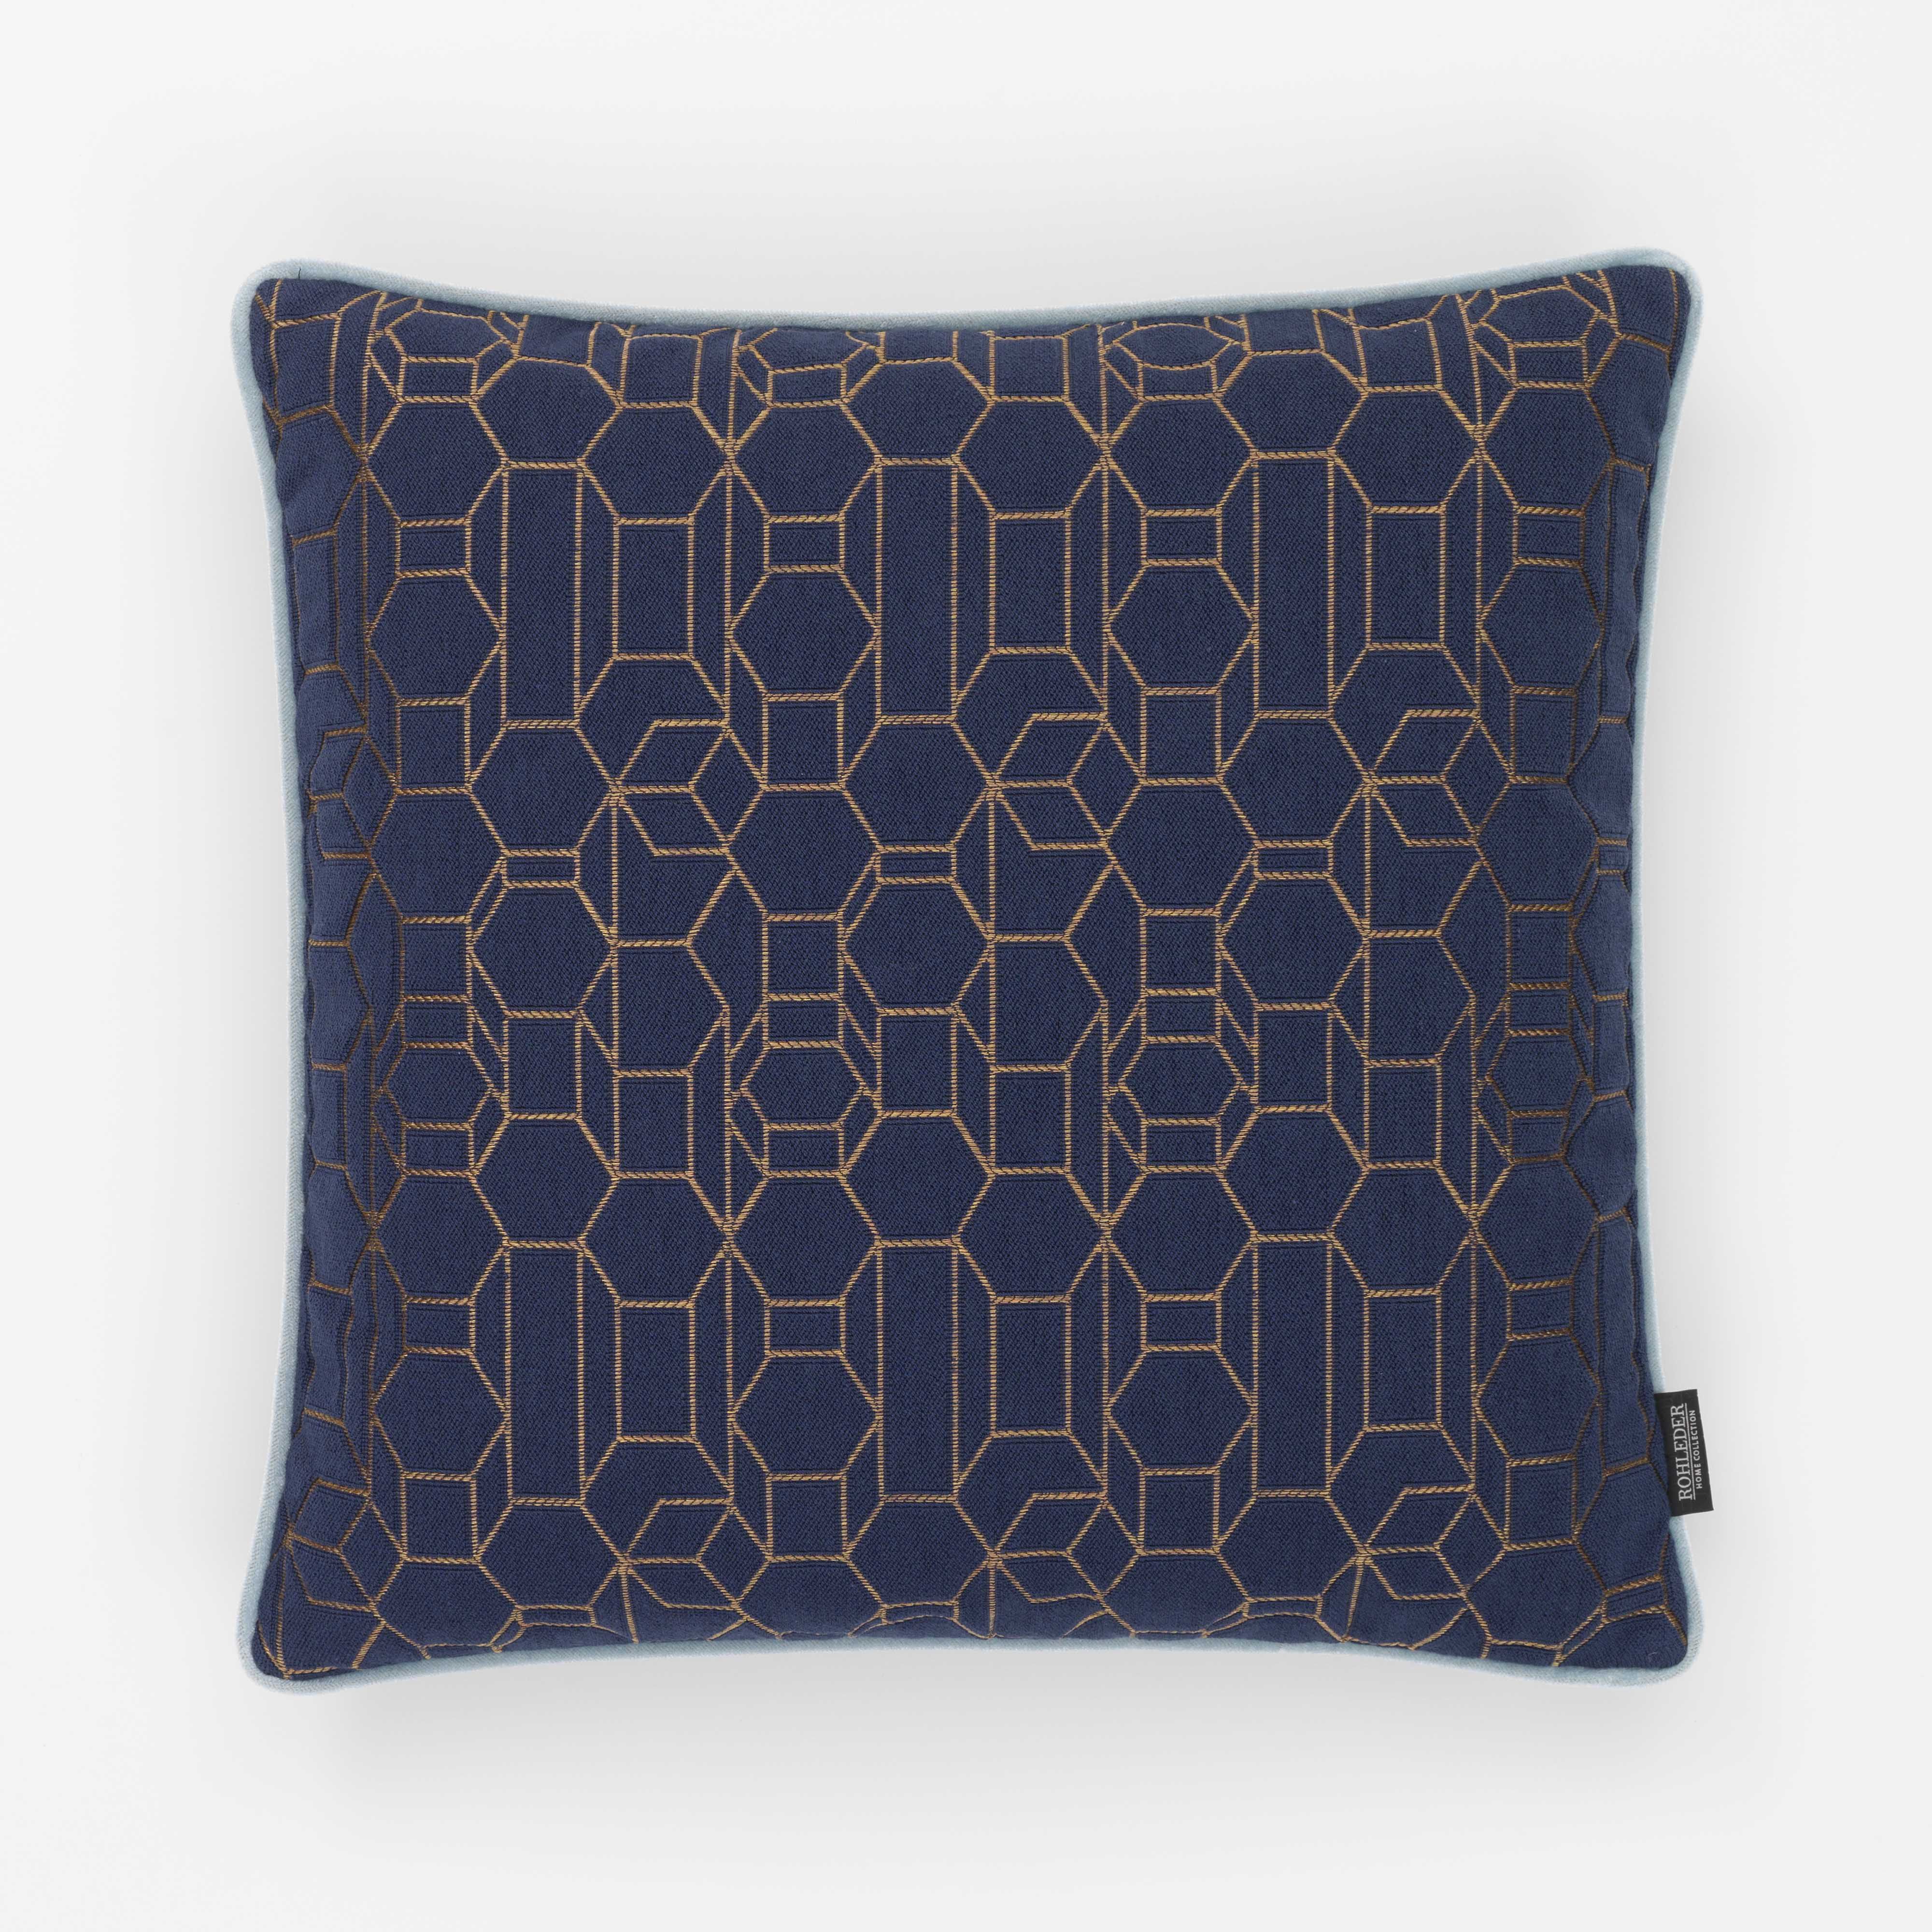 Kissen Hexagon blau 50x50 cm Kollektion Edward van Vliet Rohleder exklusiv